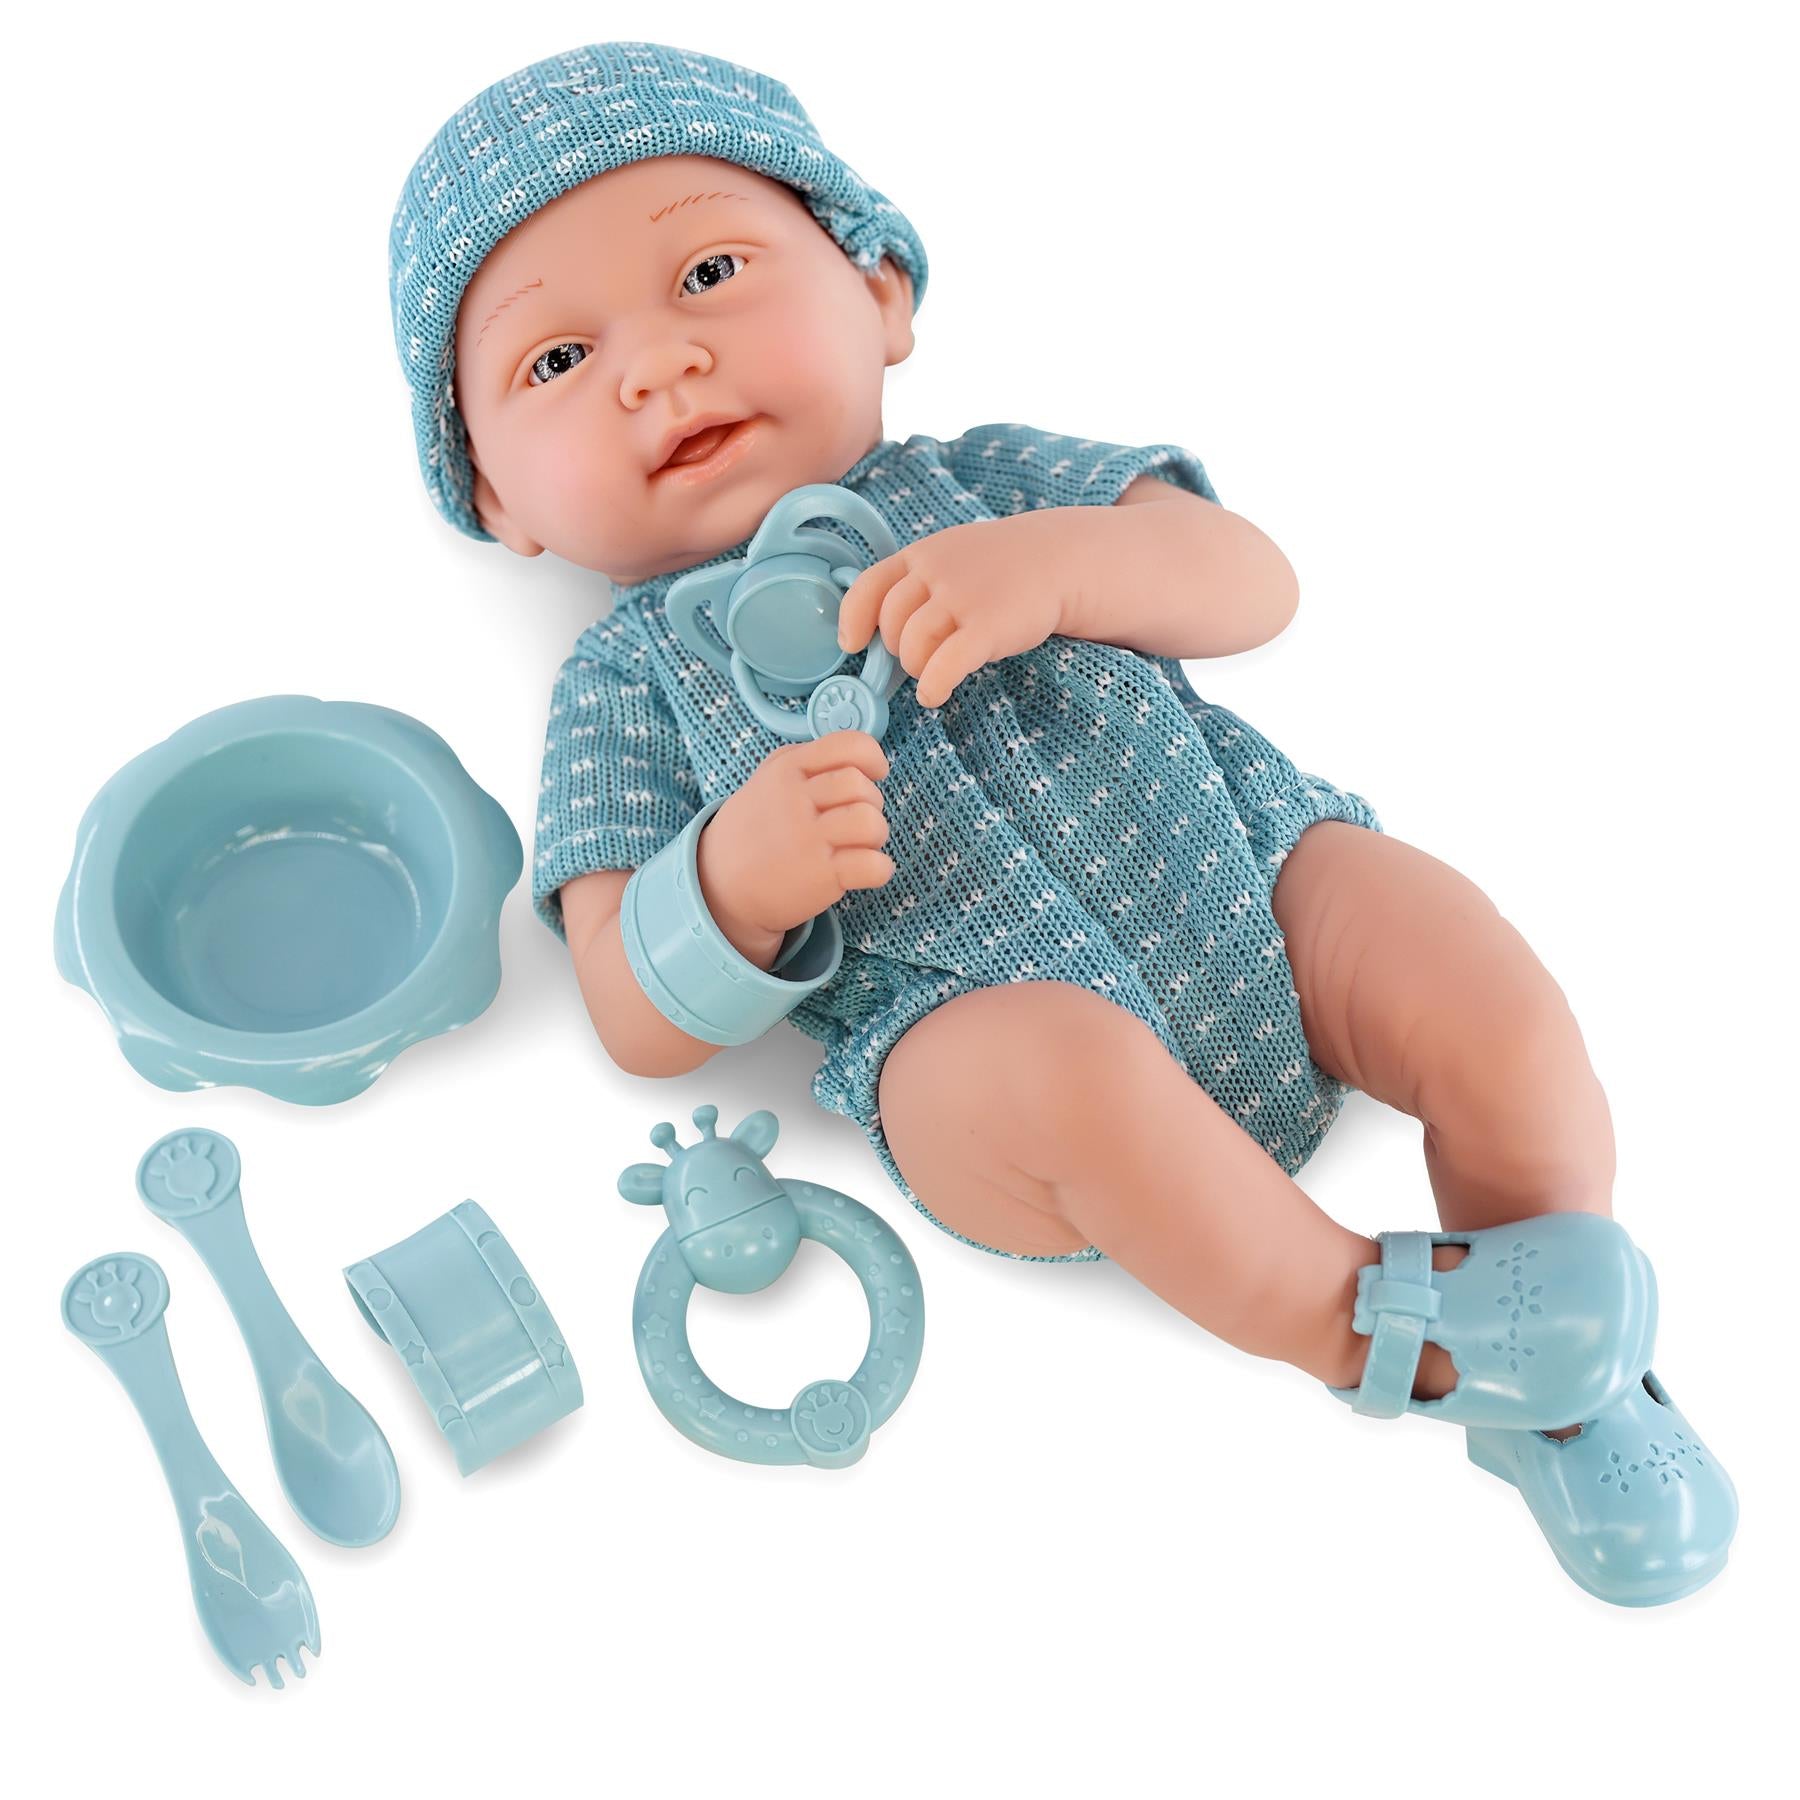 The Magic Toy Shop BiBi Doll Newborn Boy & Accessories (35 cm / 14")